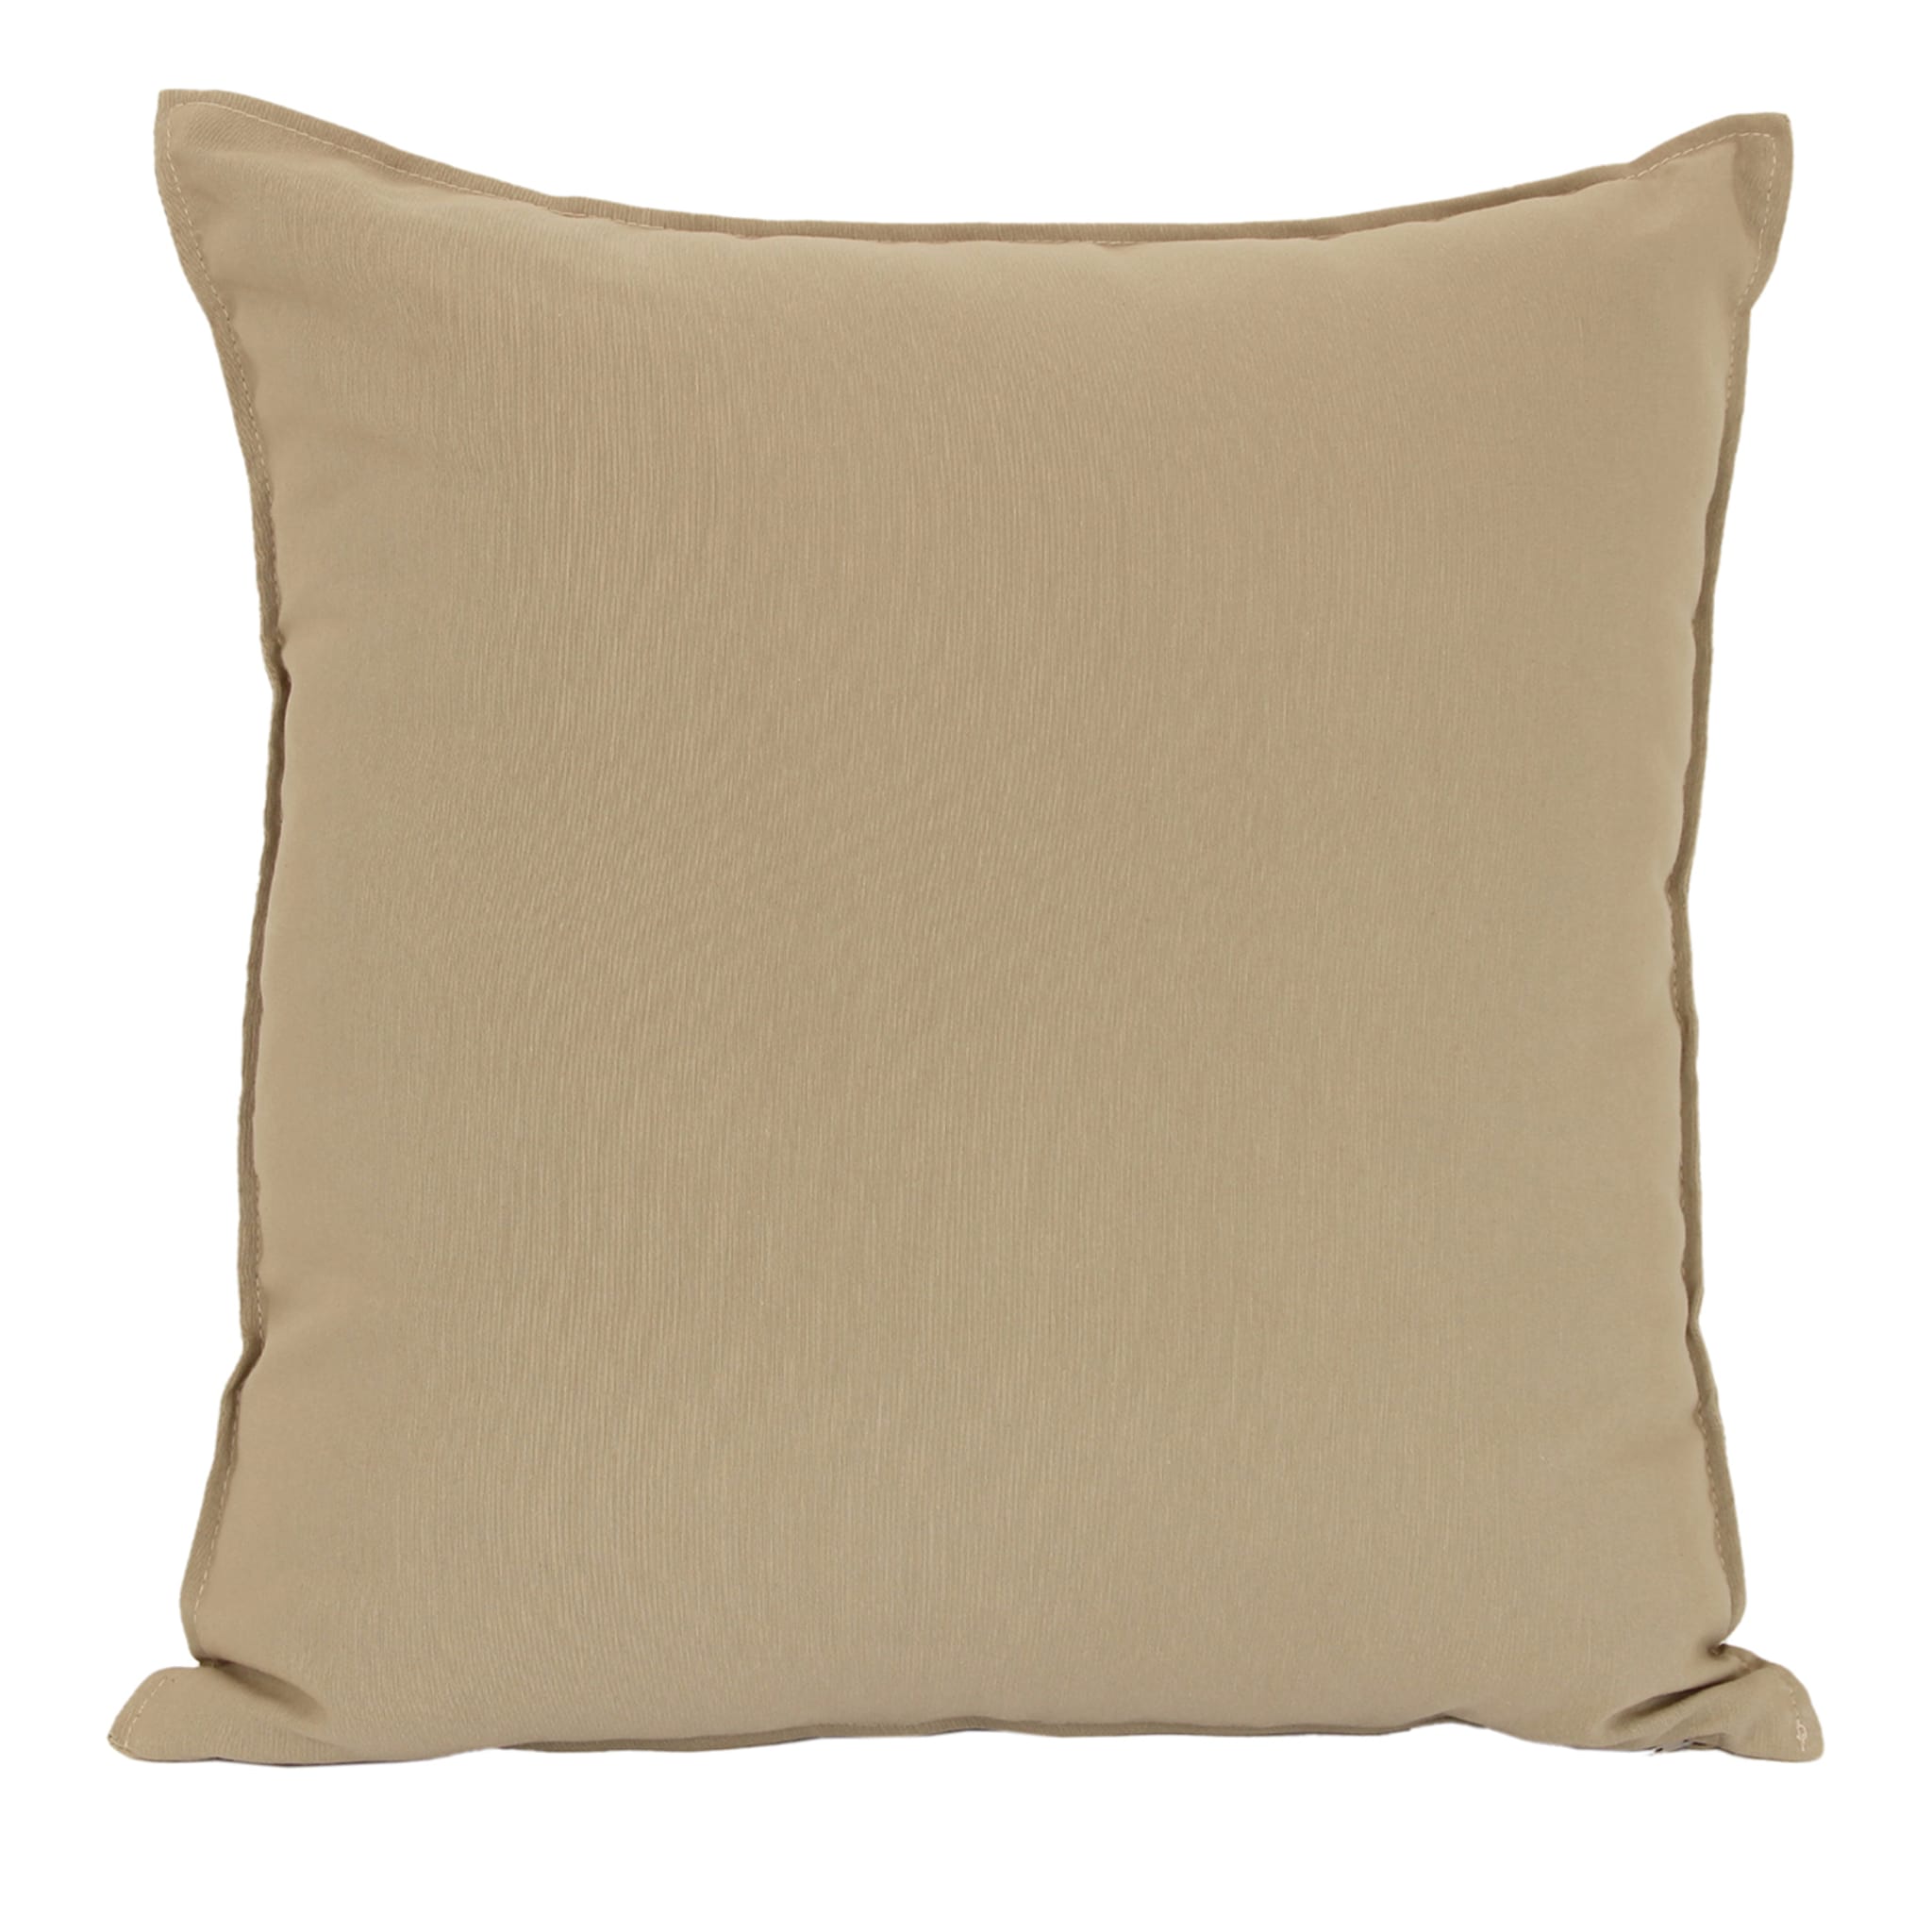 Opaque Hazelnut Set of 2 cushions - Main view